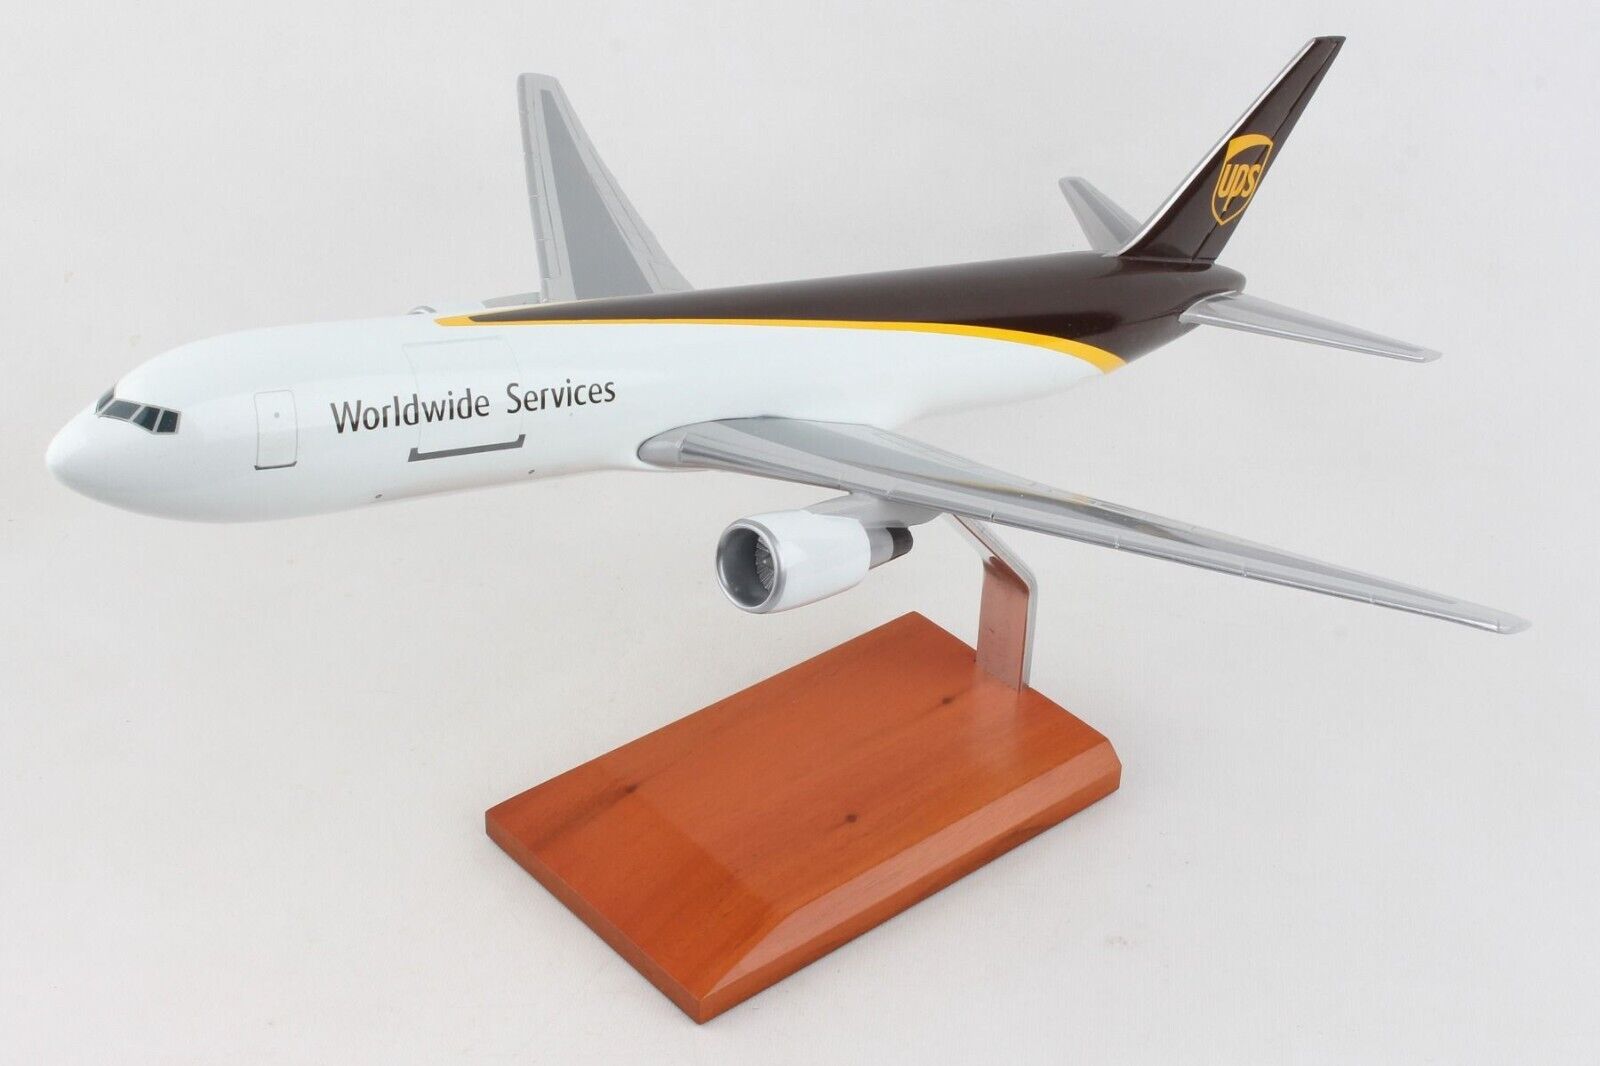 UPS Worldwide Services Boeing 767-300F Desk Top Display 1/100 Model ES Airplane